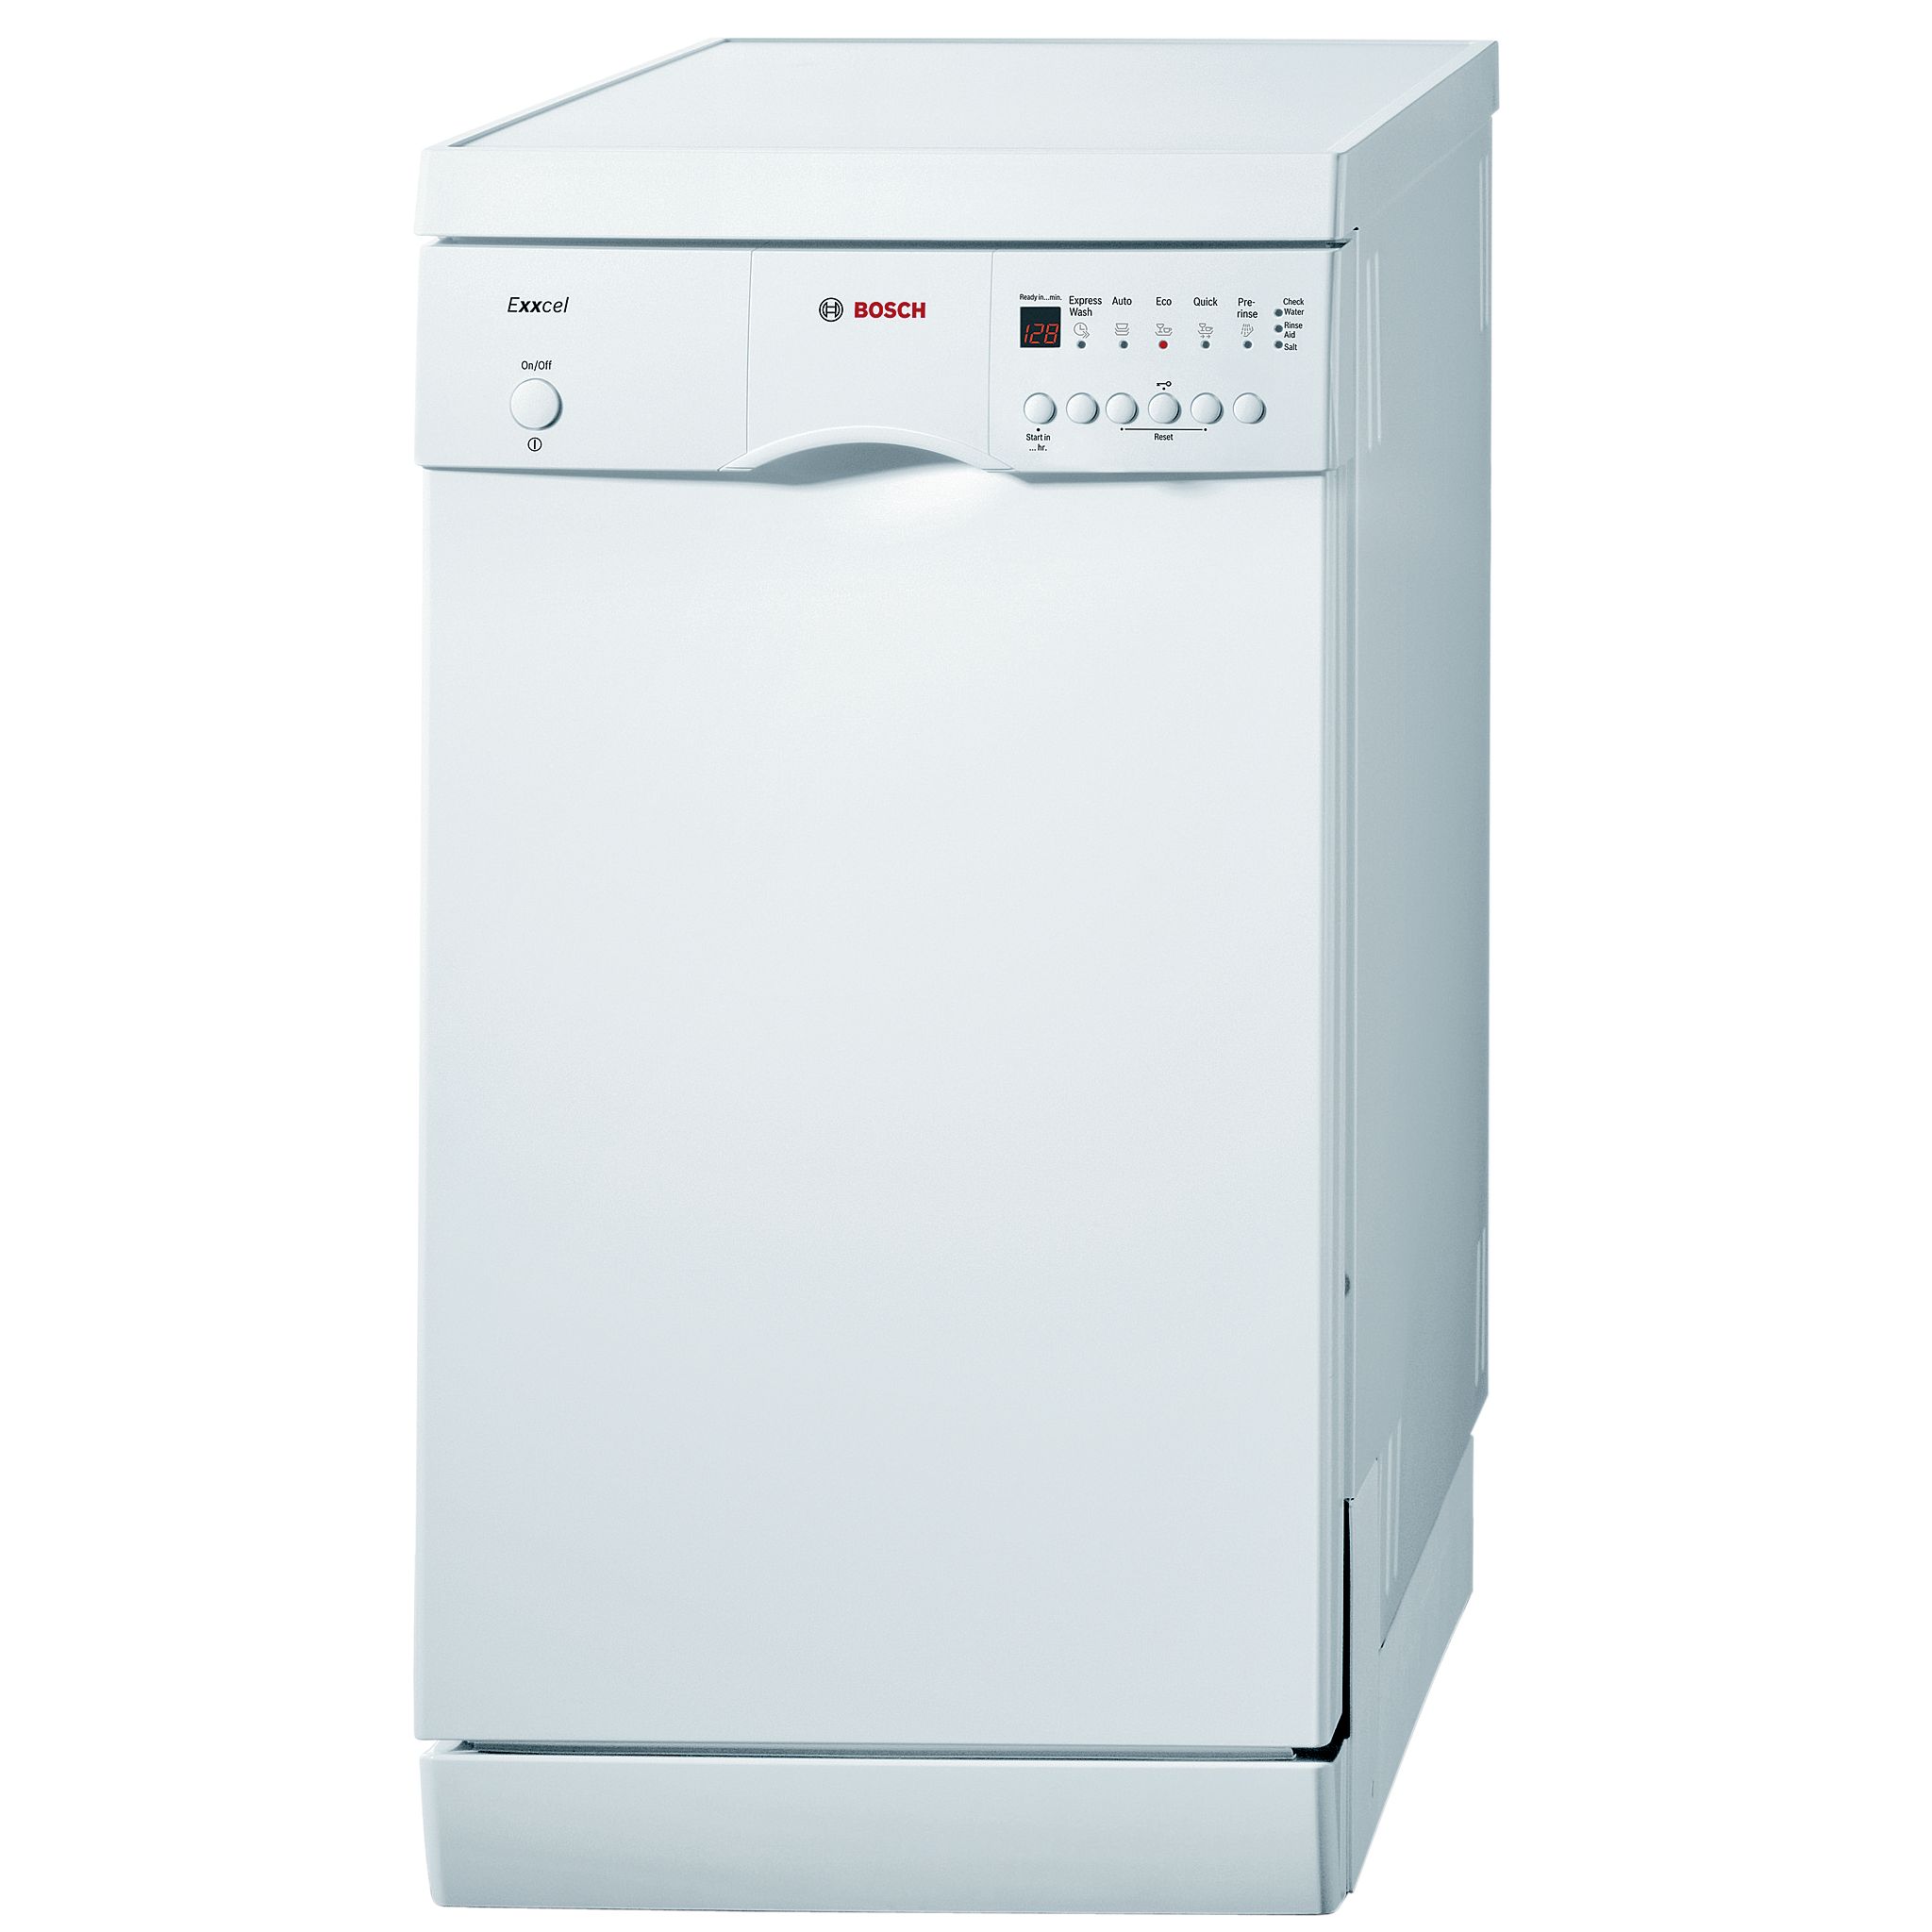 Bosch Exxcel SRS45E42GB Slimline Dishwasher, White at John Lewis